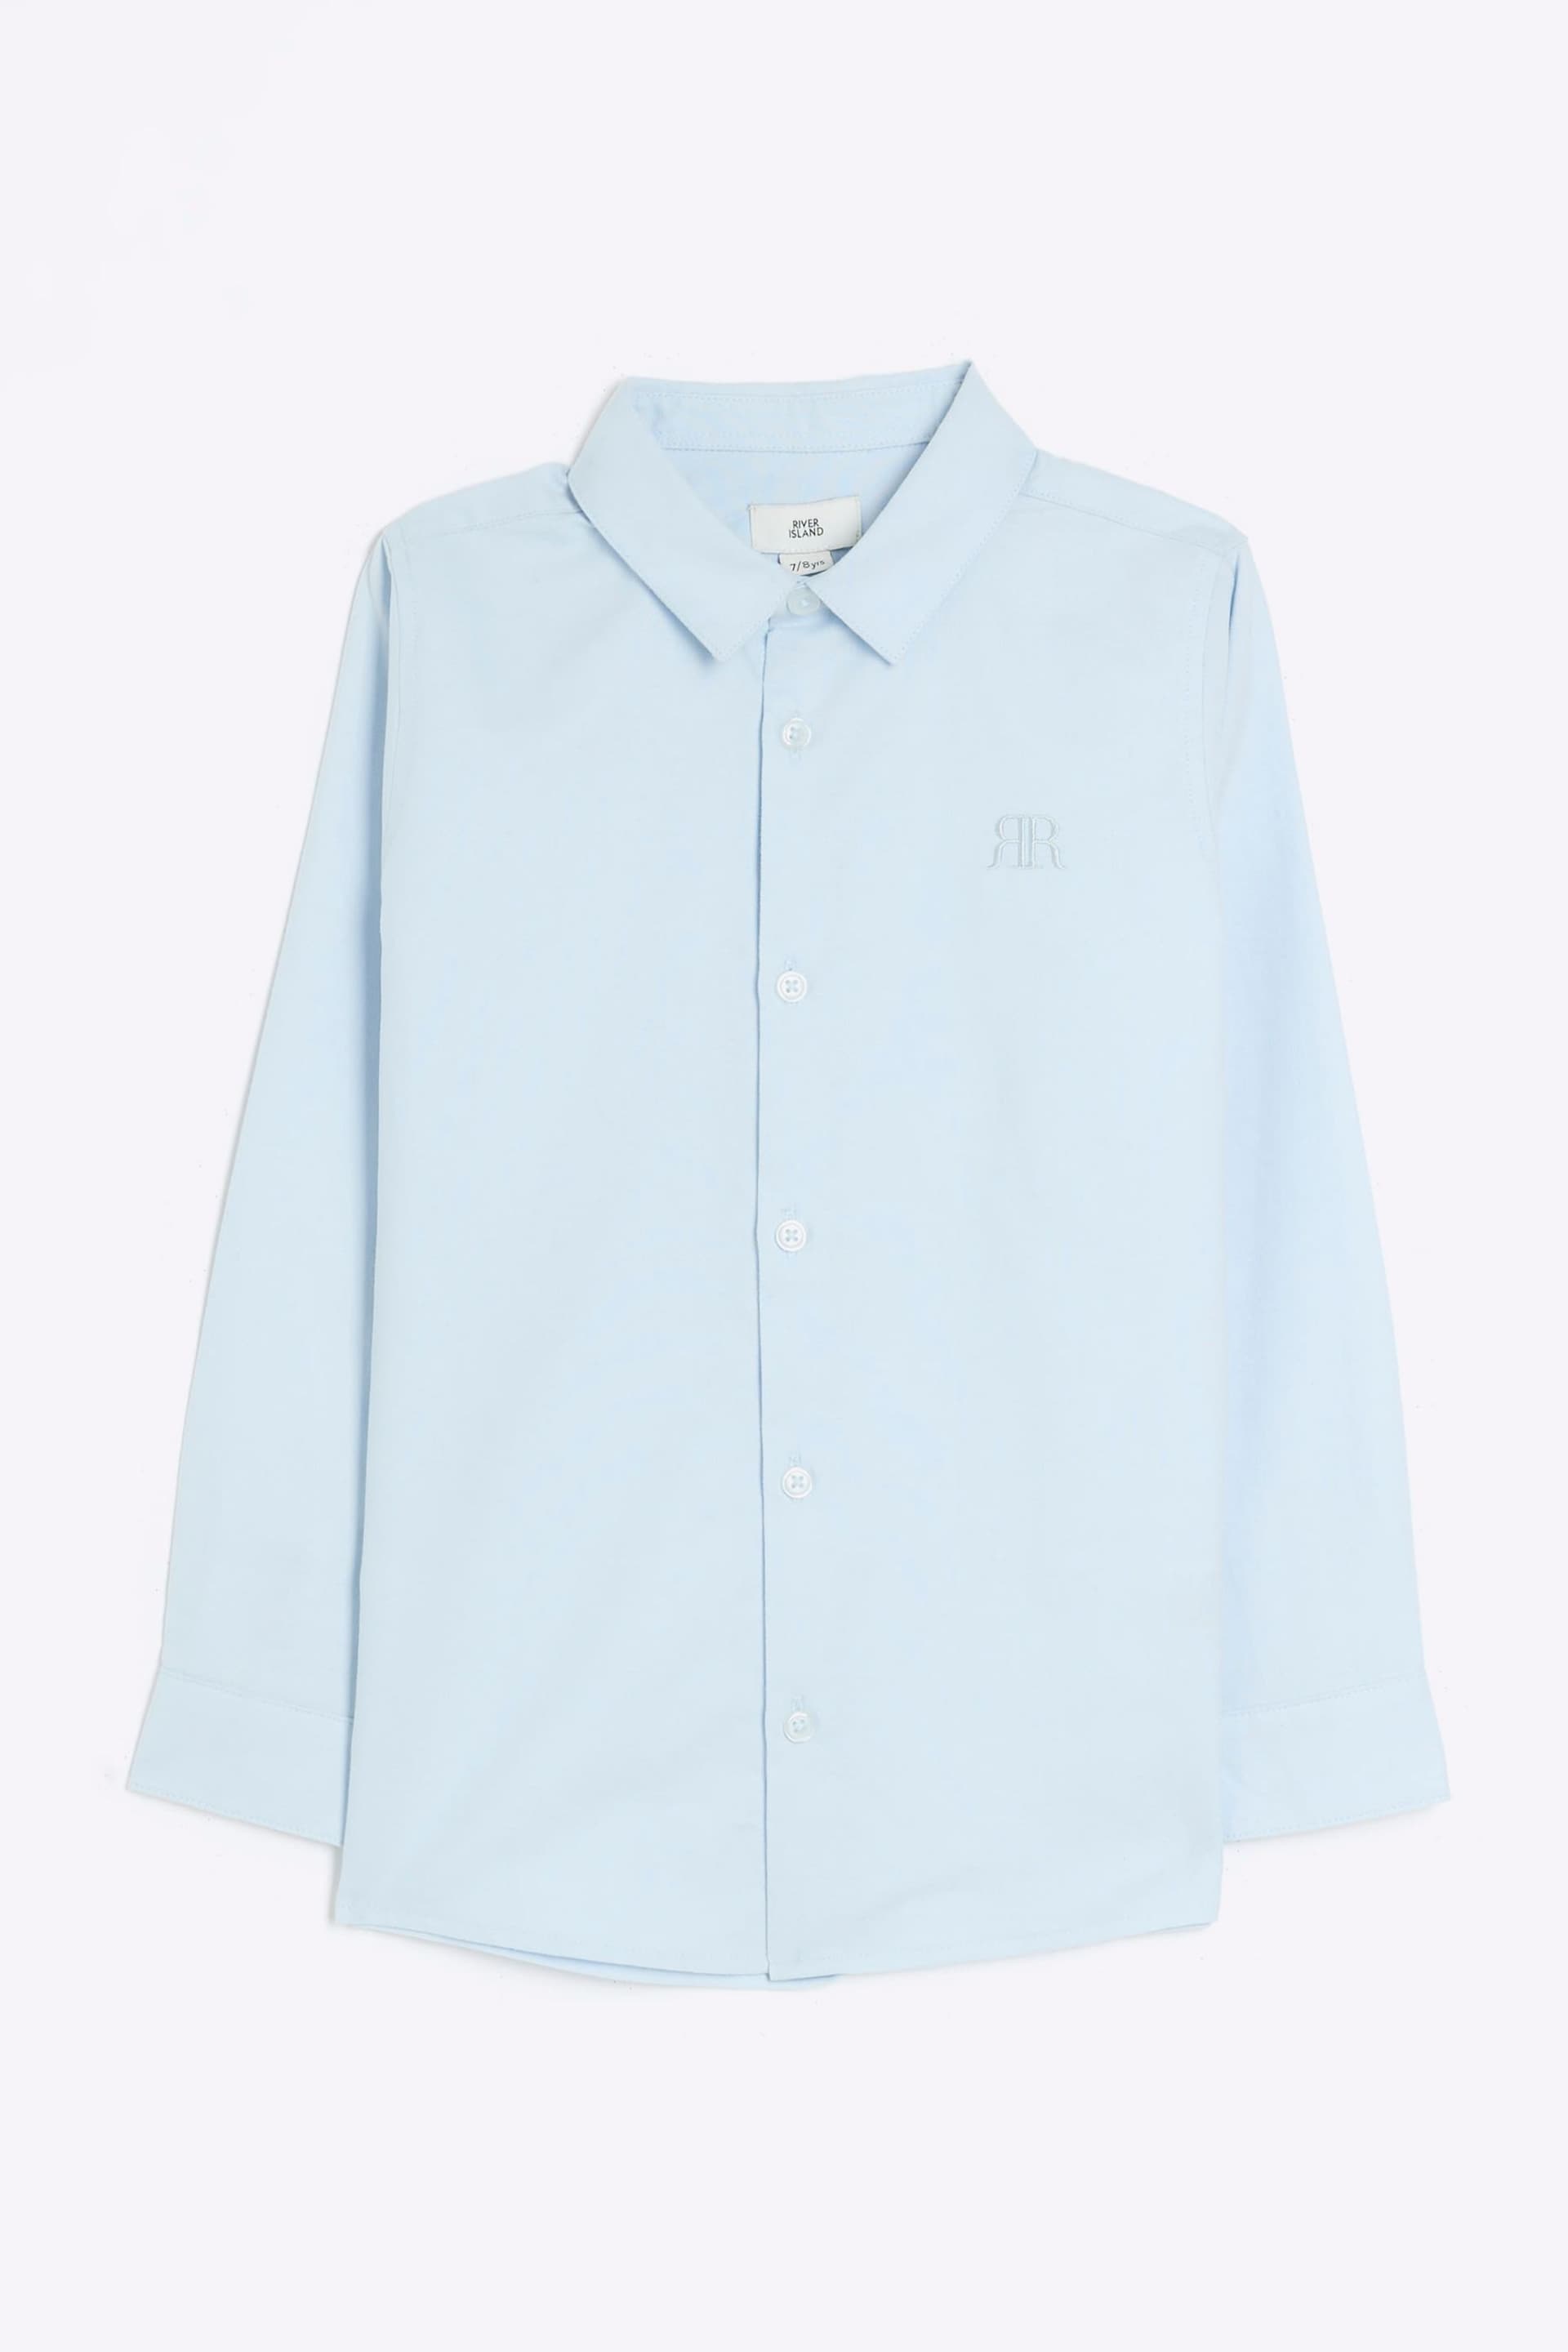 River Island Blue Cotton Boys Oxford Shirt - Image 1 of 3